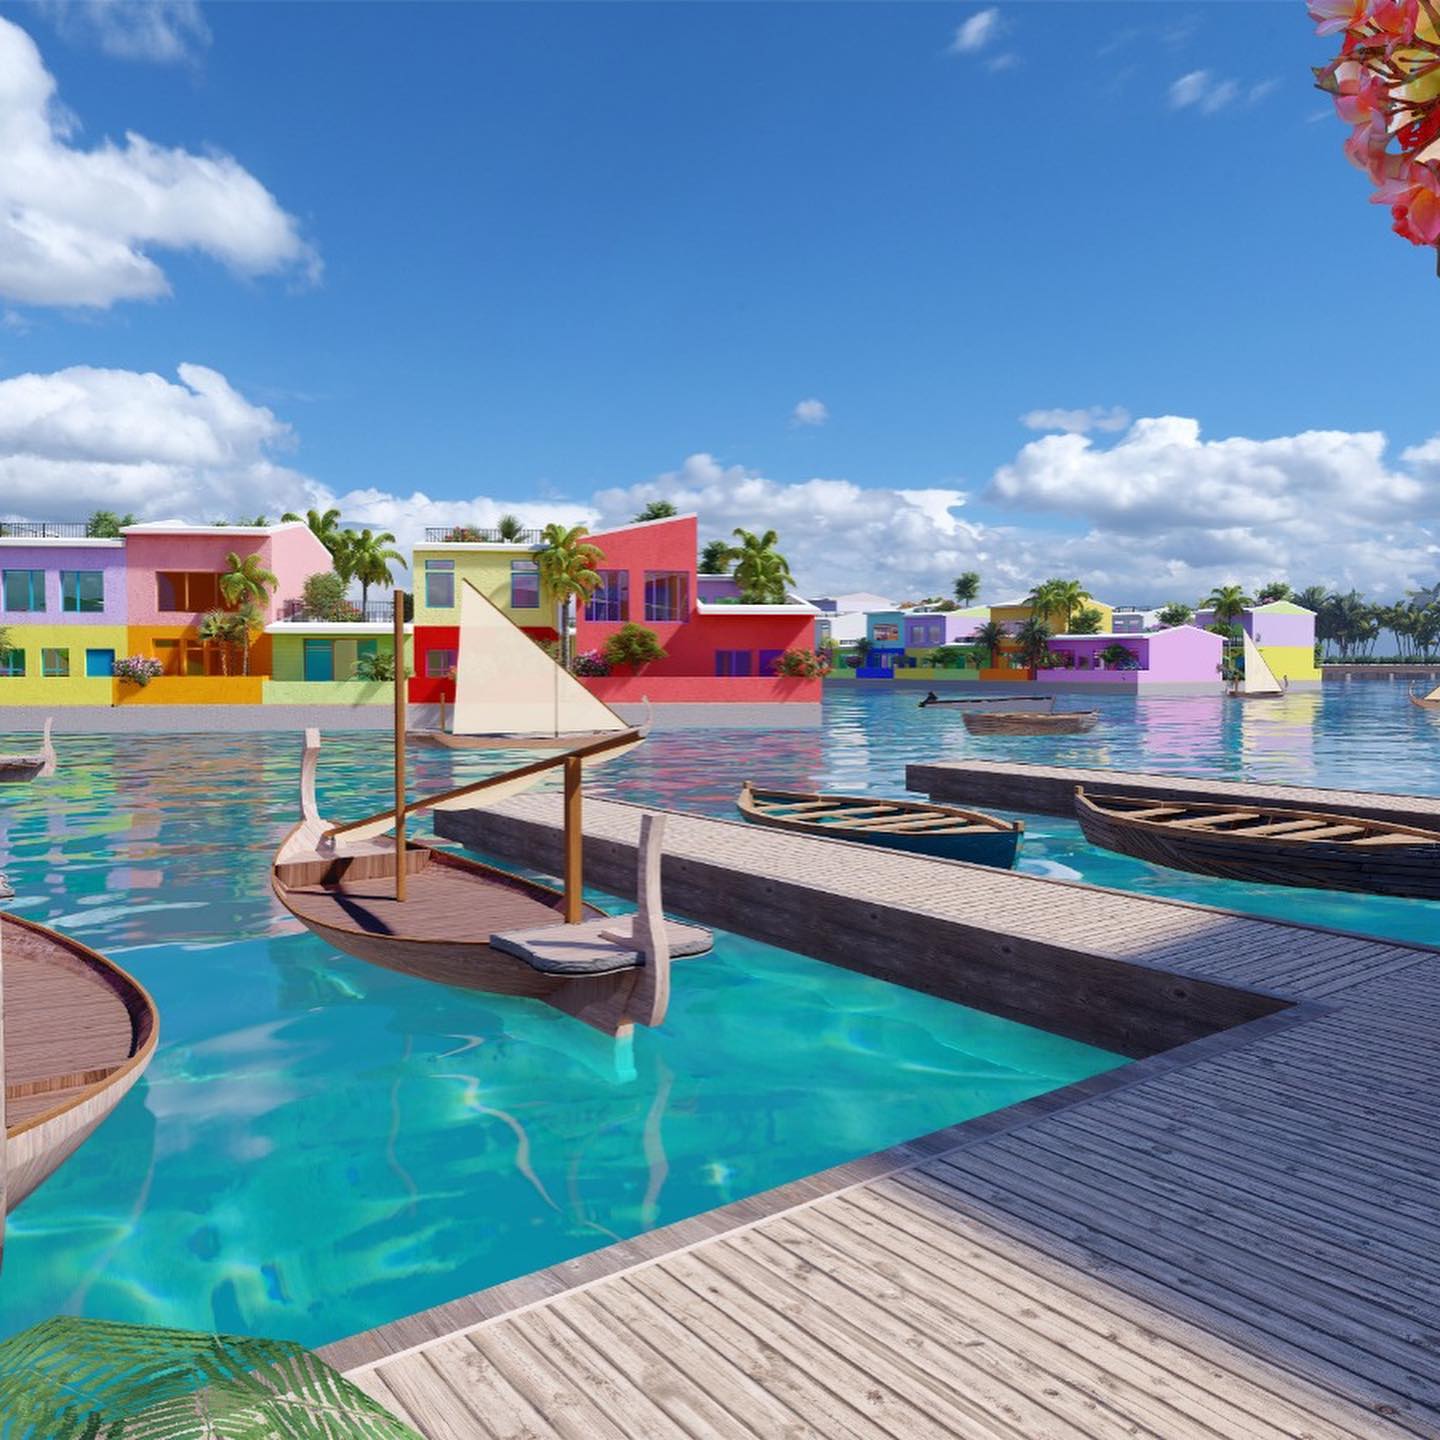 Il progetto "Maldives Floating City" (Fonte: Waterstudio / Dutch Docklands)